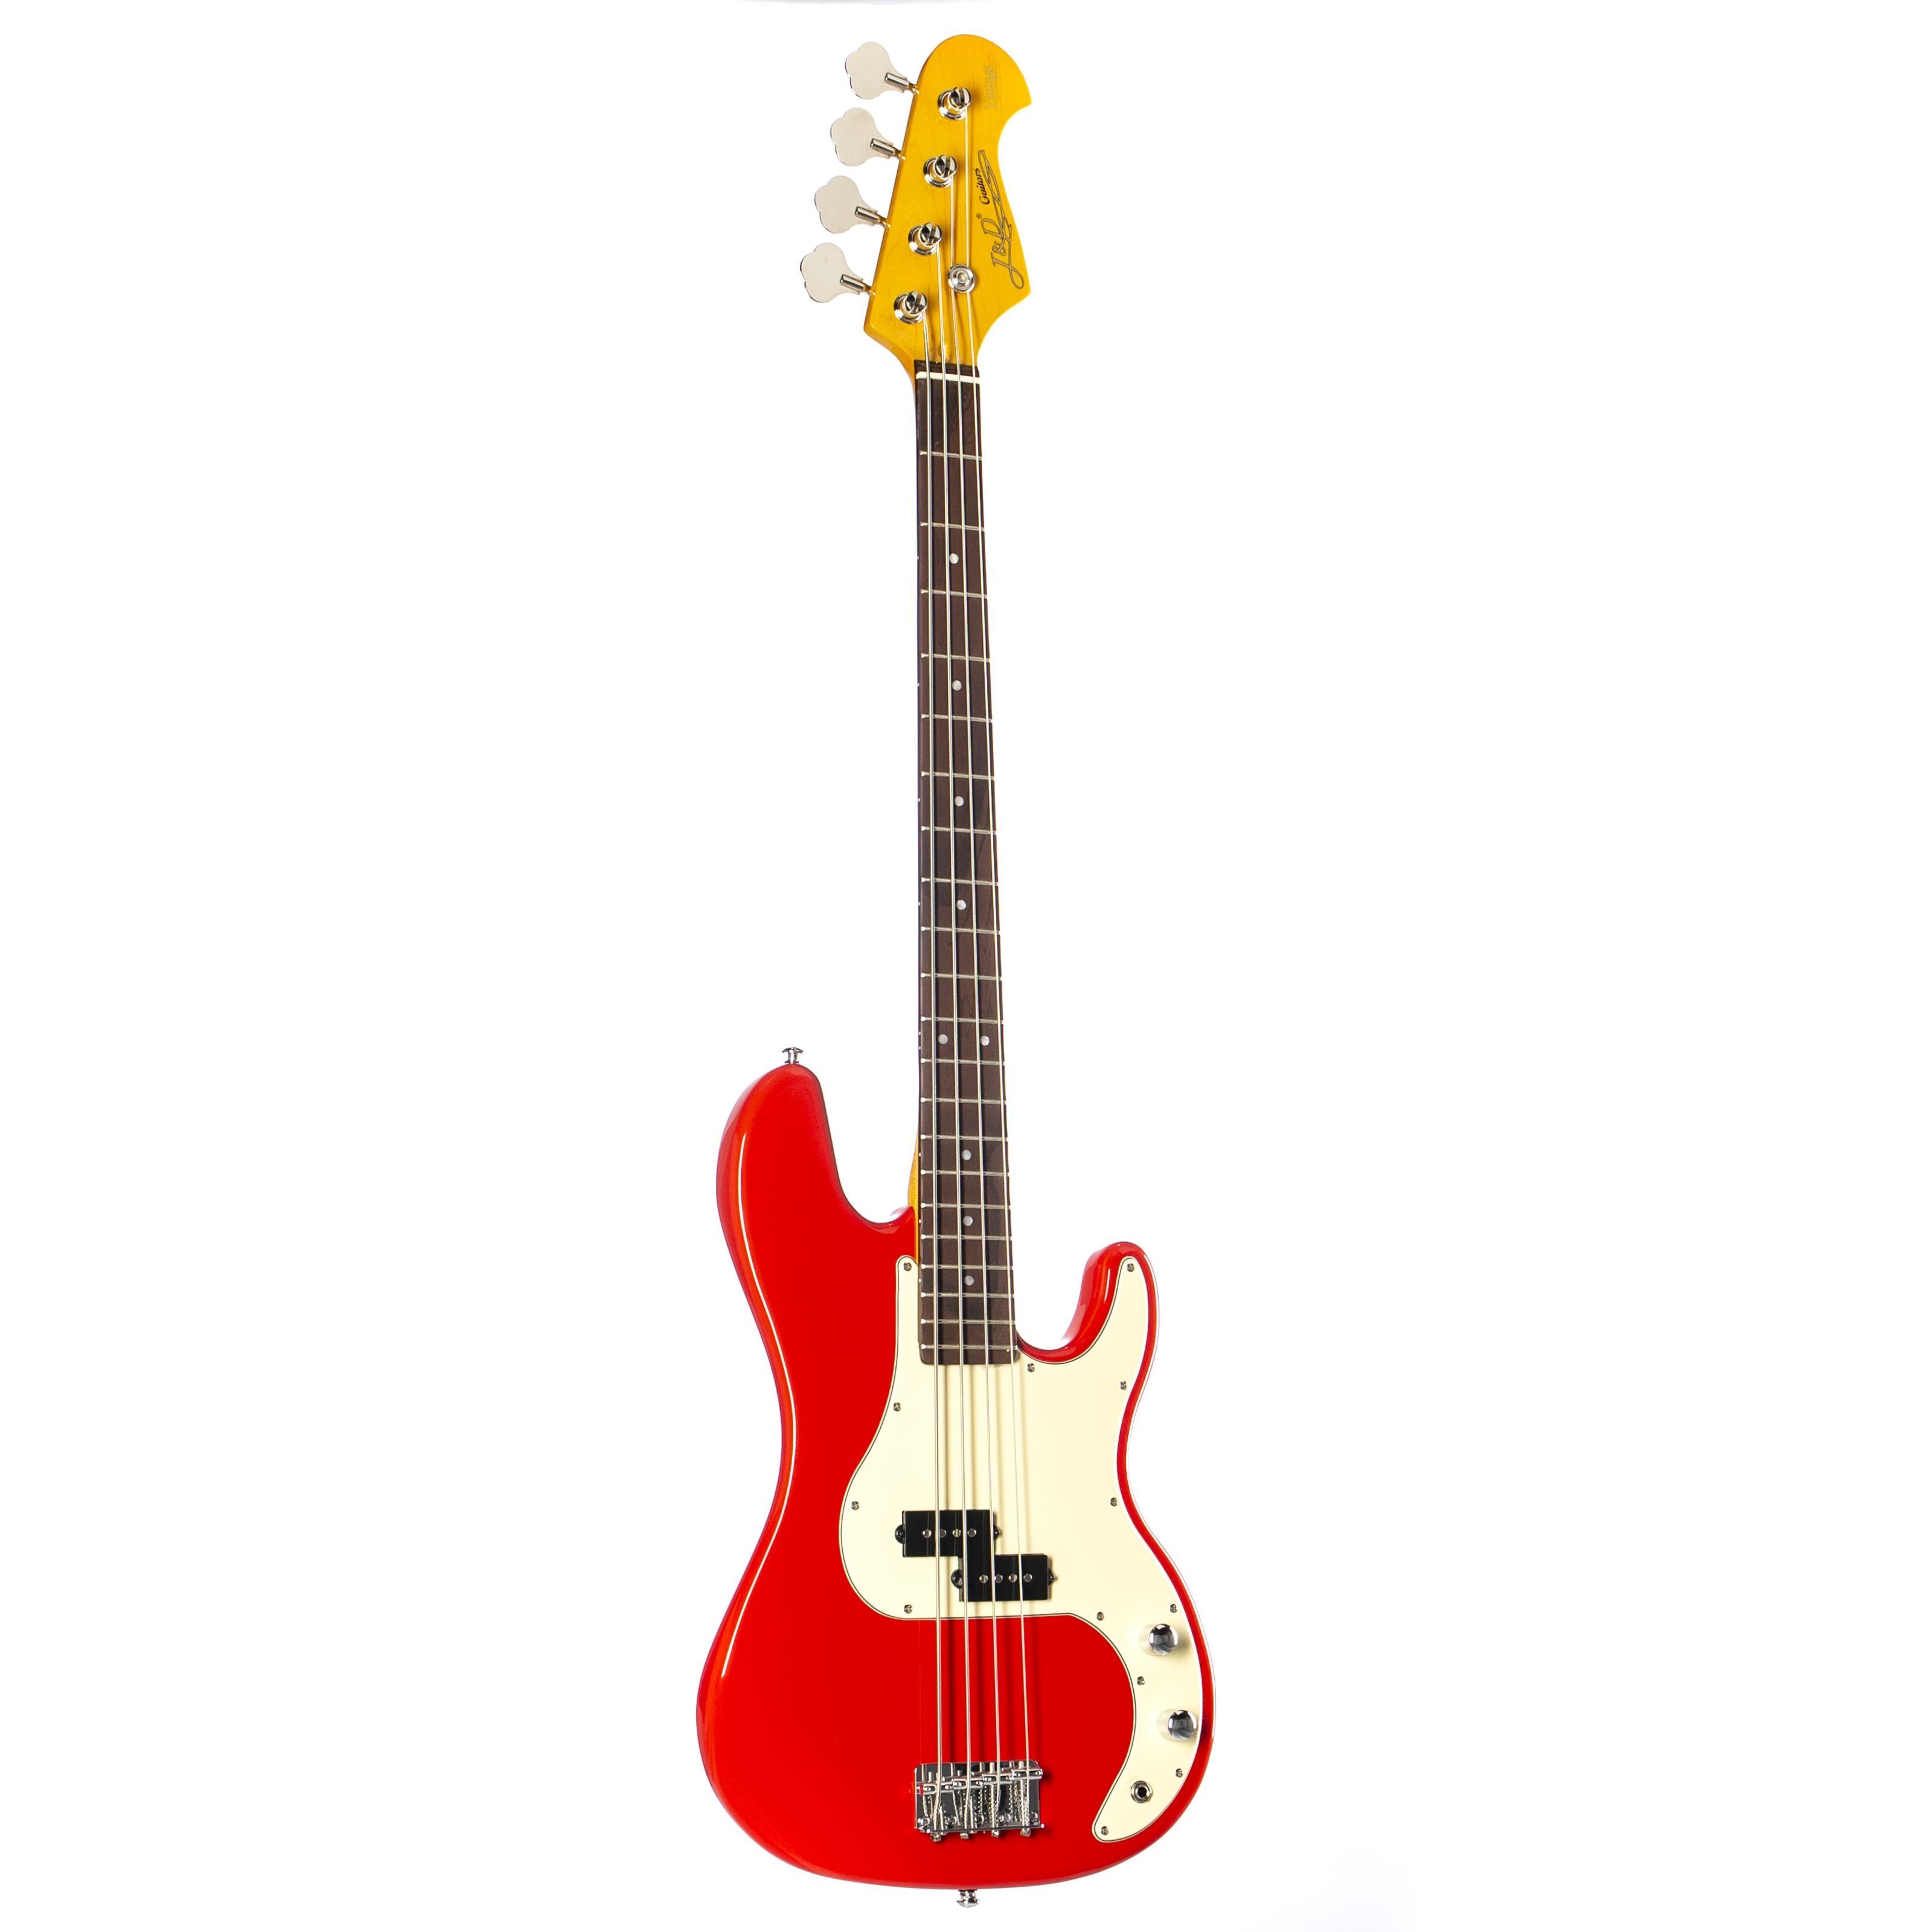 J & D E-Bass, E-Bass, Elektrische Bass Gitarre mit 4 Saiten und Linde  Korpus, P Bass mit Split-Coil Tonabnehmer und passiver Elektronik, 1963  Fiesta Red